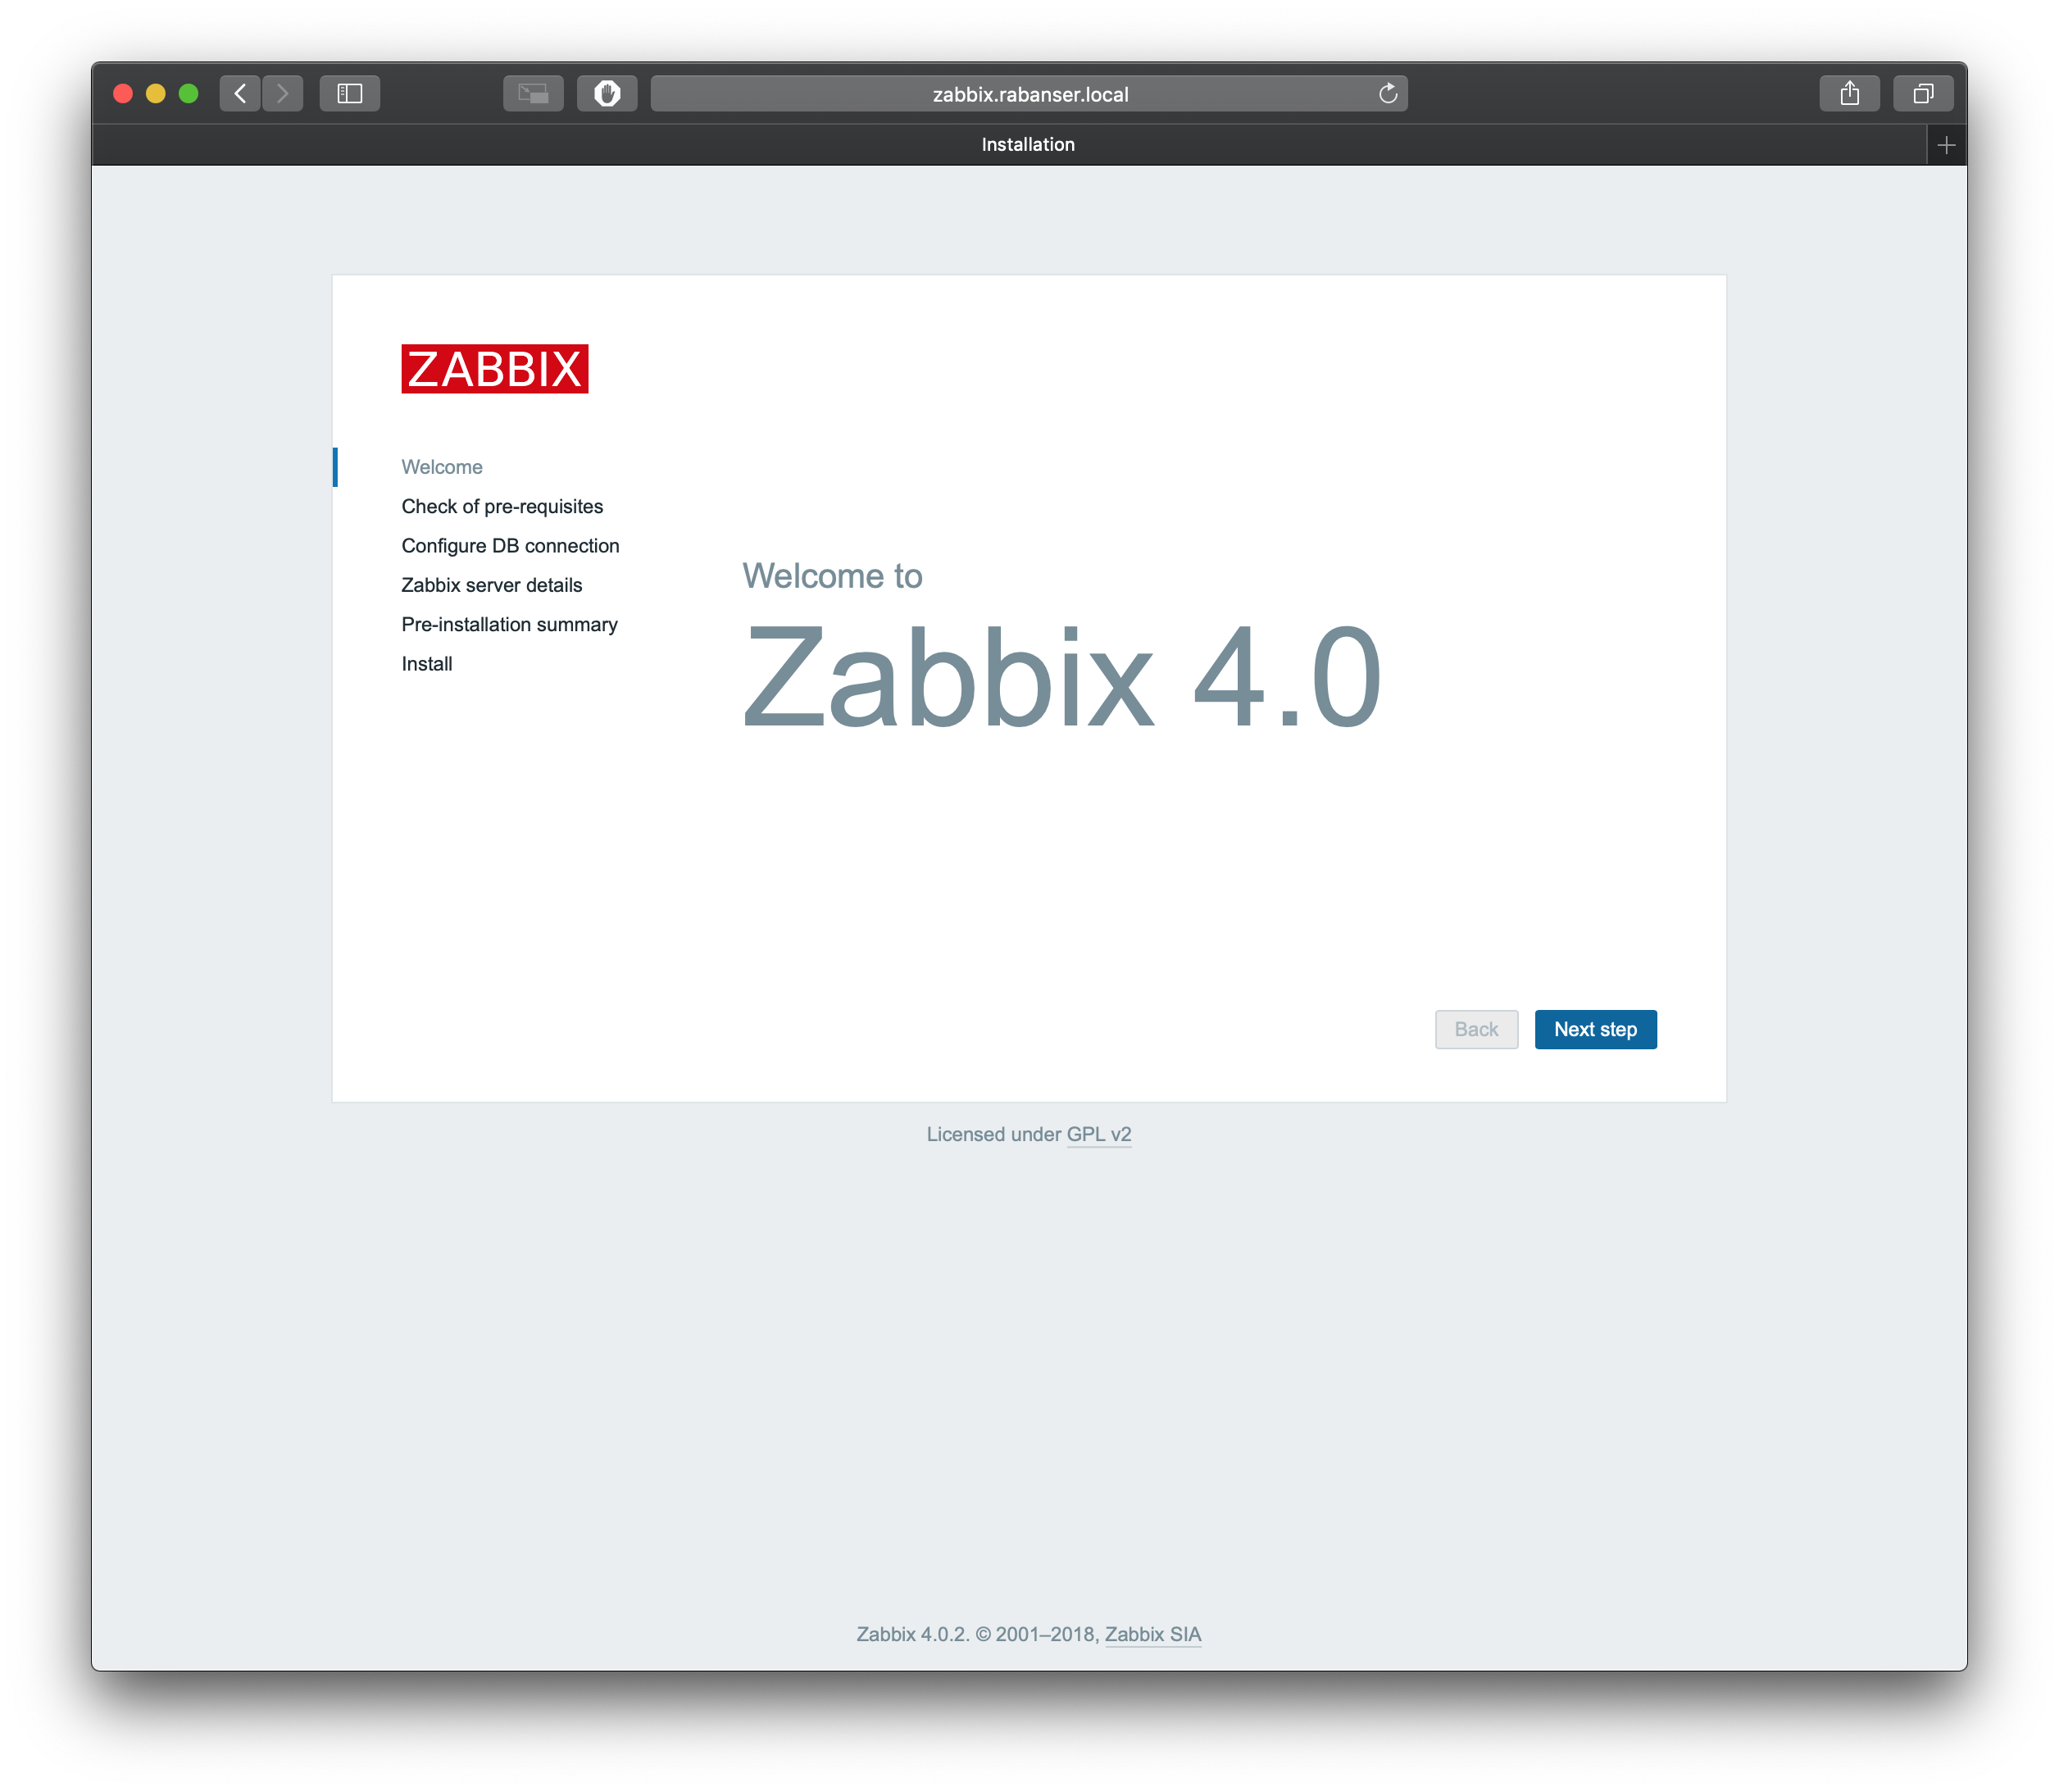 Install Zabbix - Start the installation